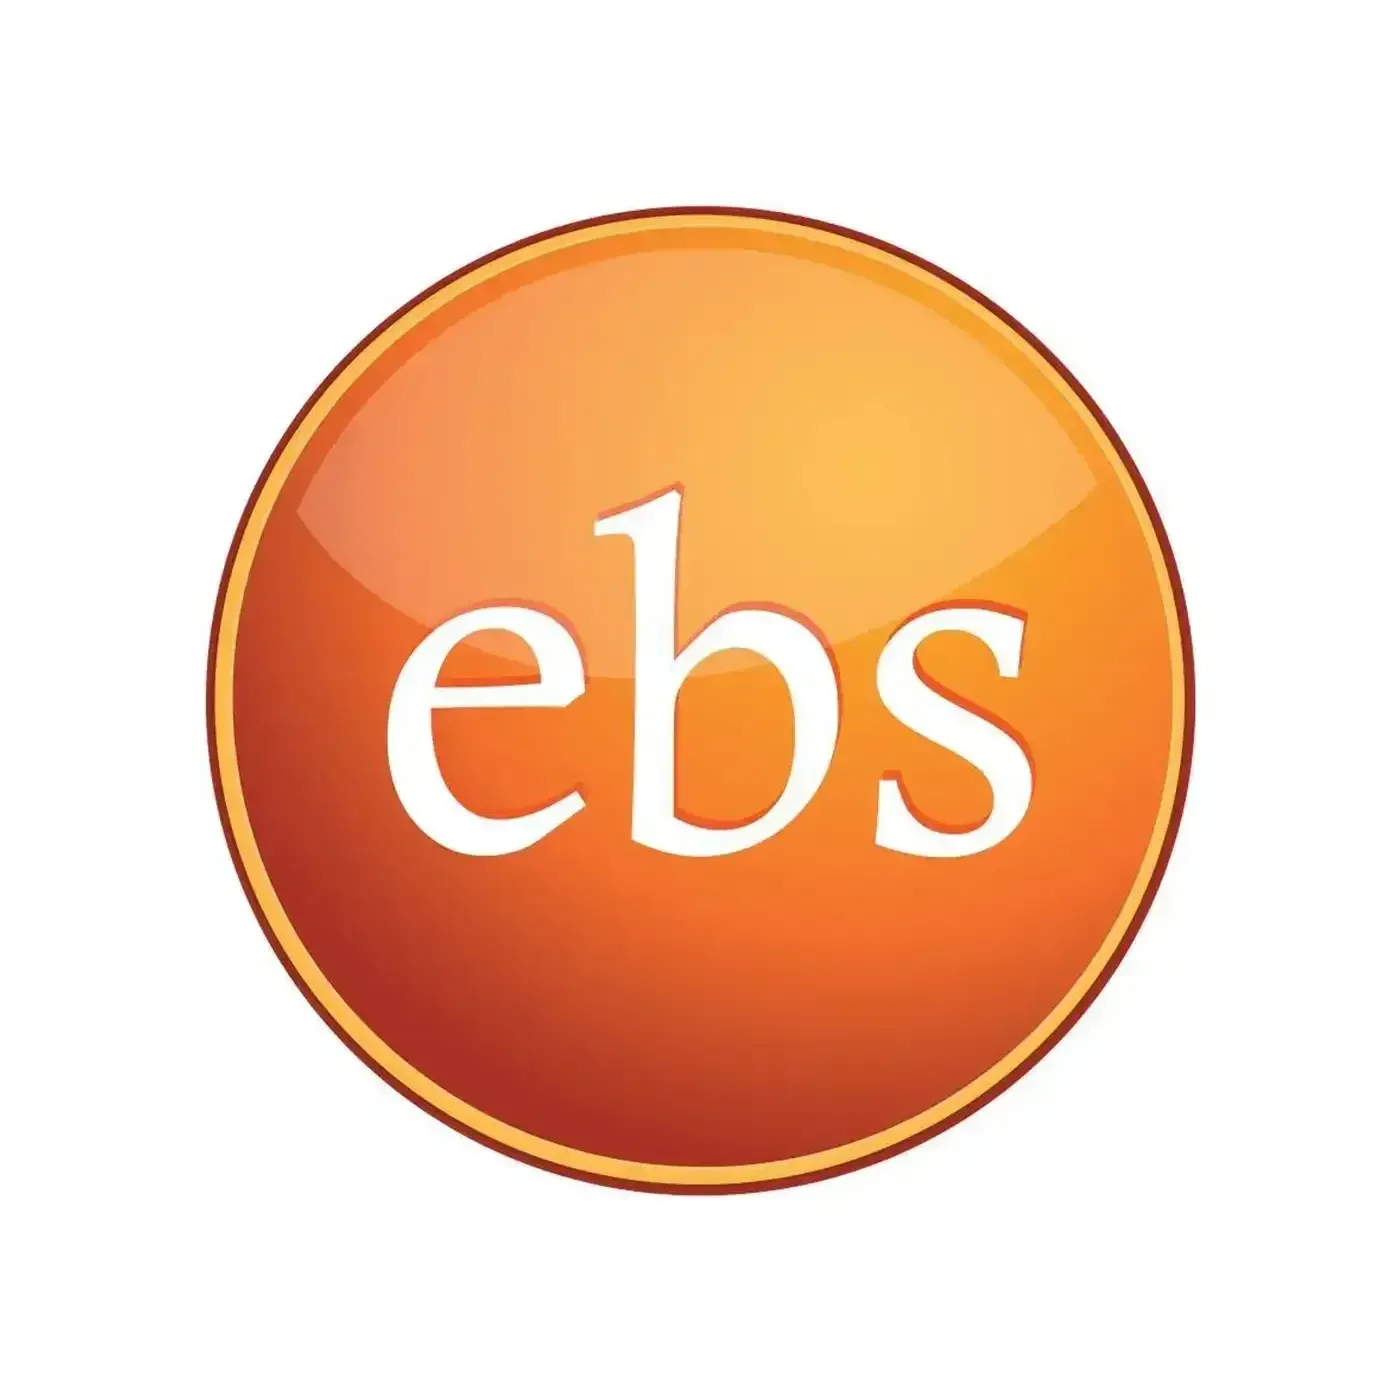 EBS TV